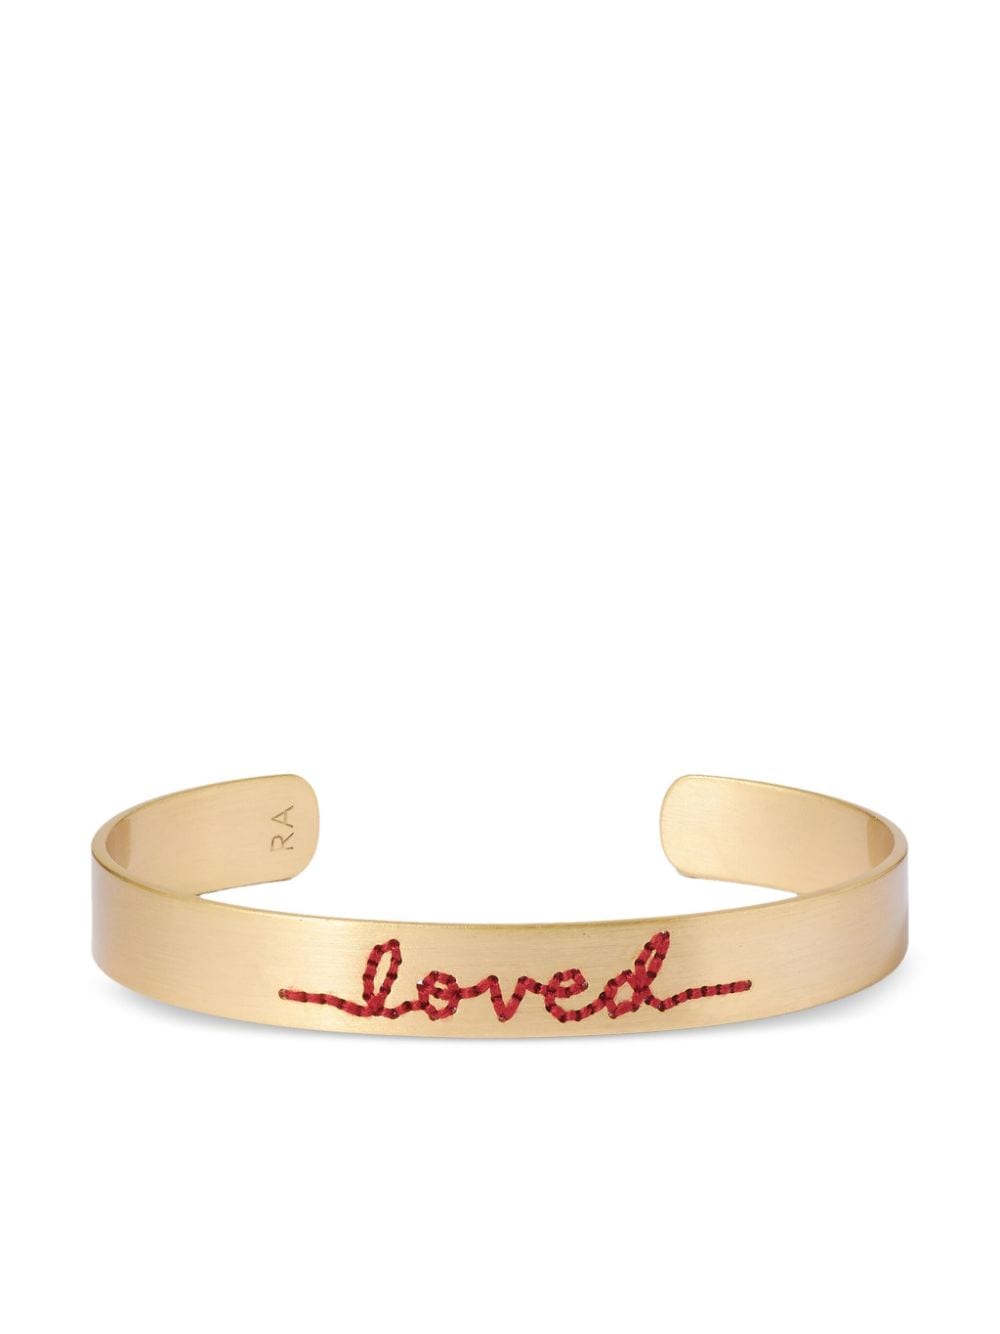 Roxanne Assoulin Loved Stitched cuff bracelet - Gold